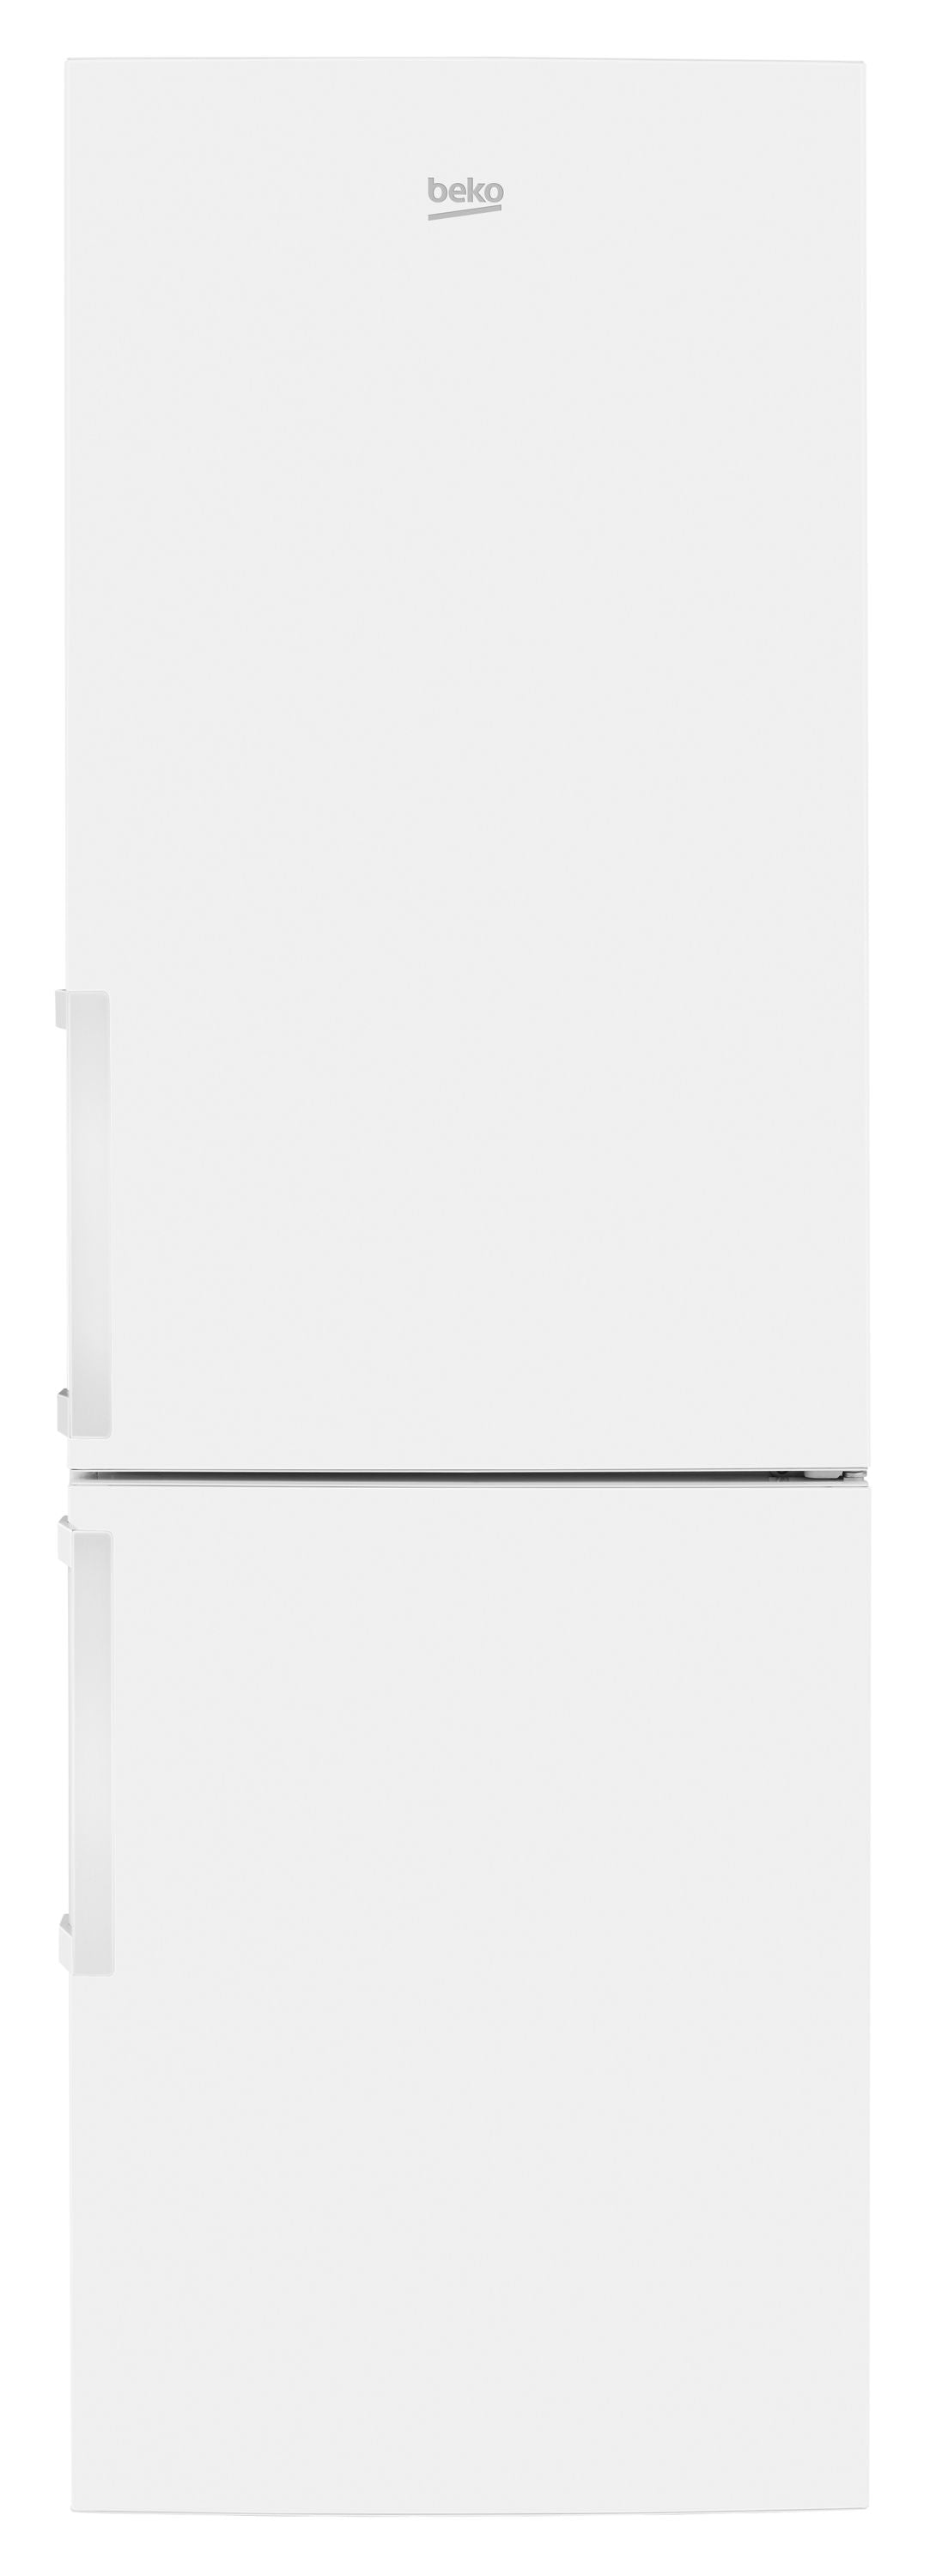 Beko CSP3685W Freestanding Fridge Freezer in White